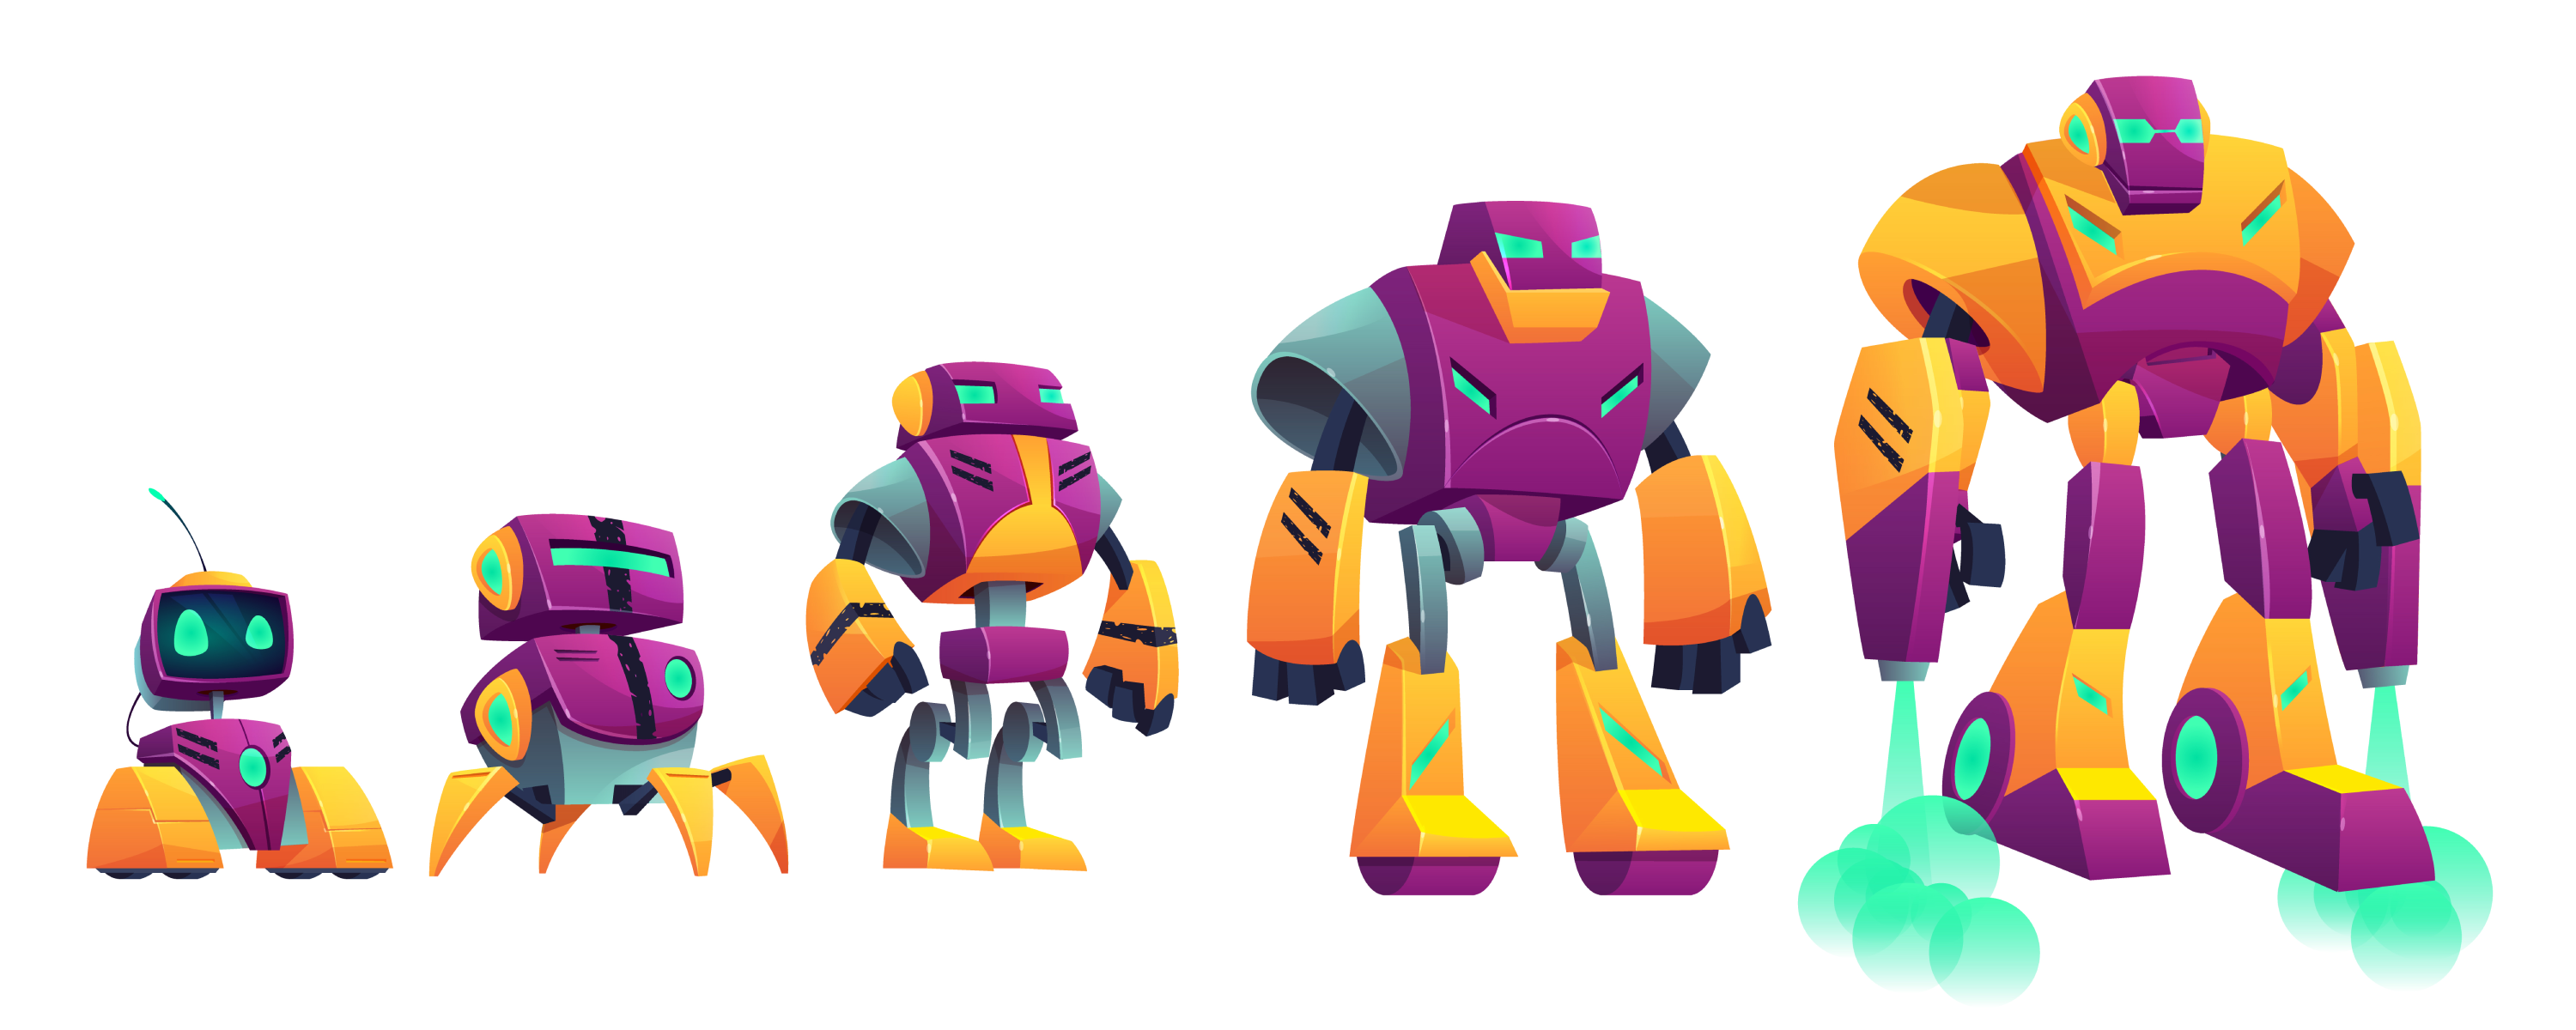 Robot versions